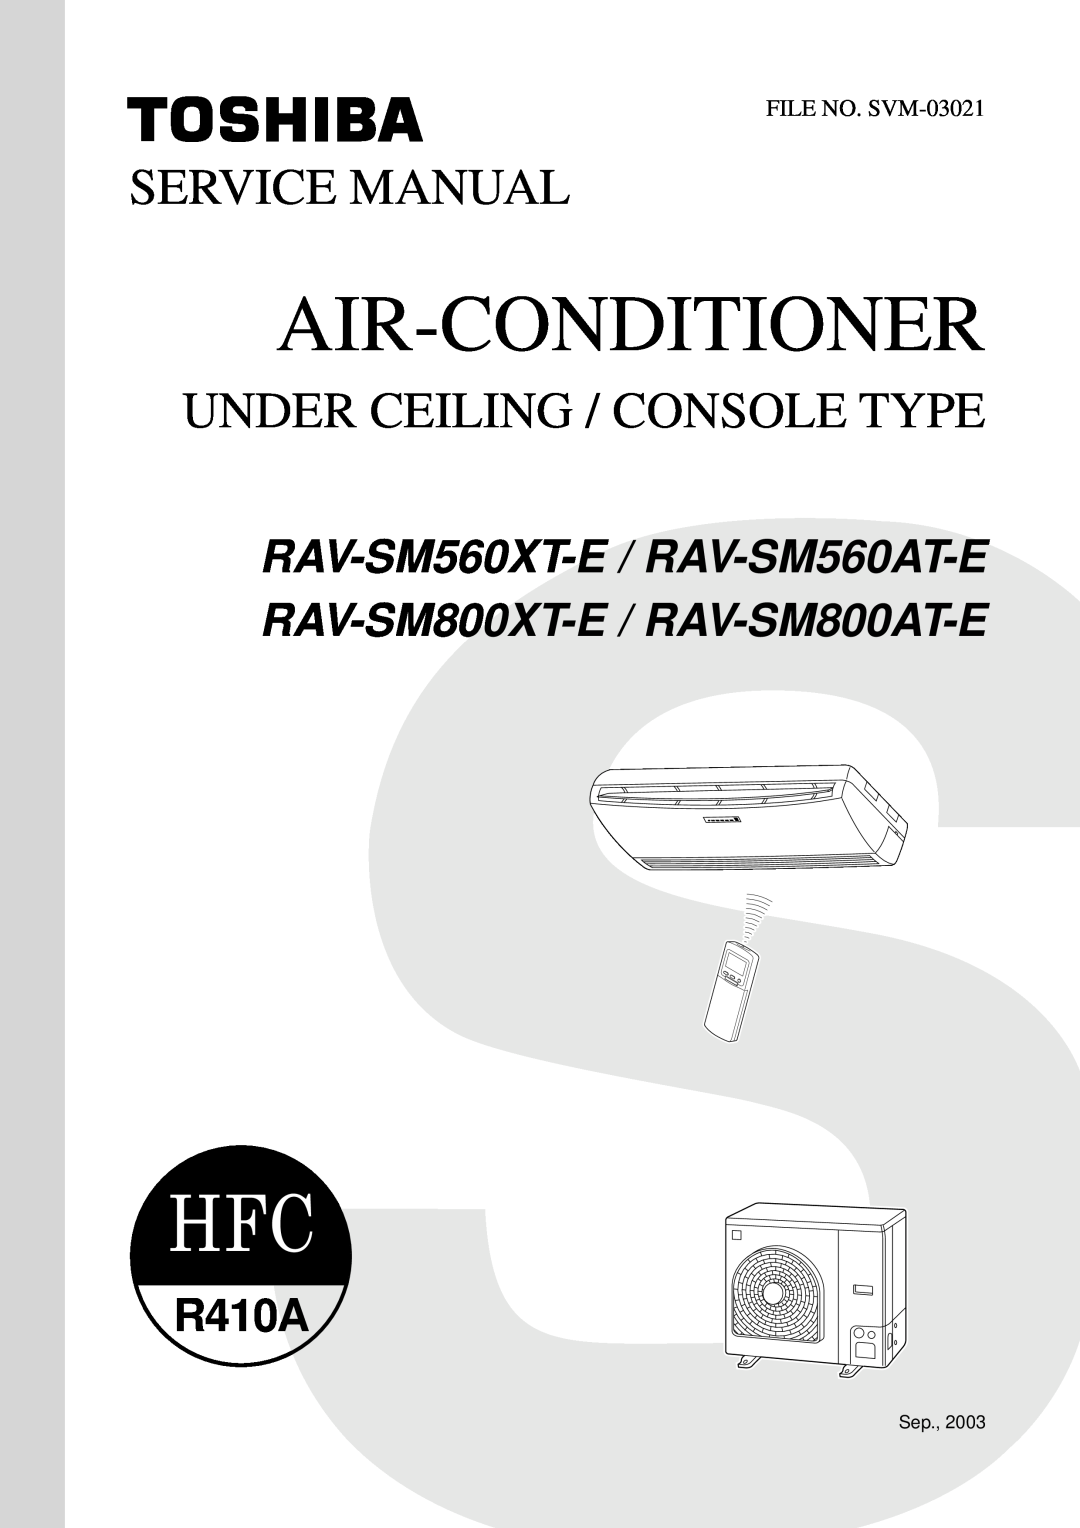 Toshiba RAV-SM560XT-E service manual Air-Conditioner, Under Ceiling / Console Type, R410A, FILE NO. SVM-03021 